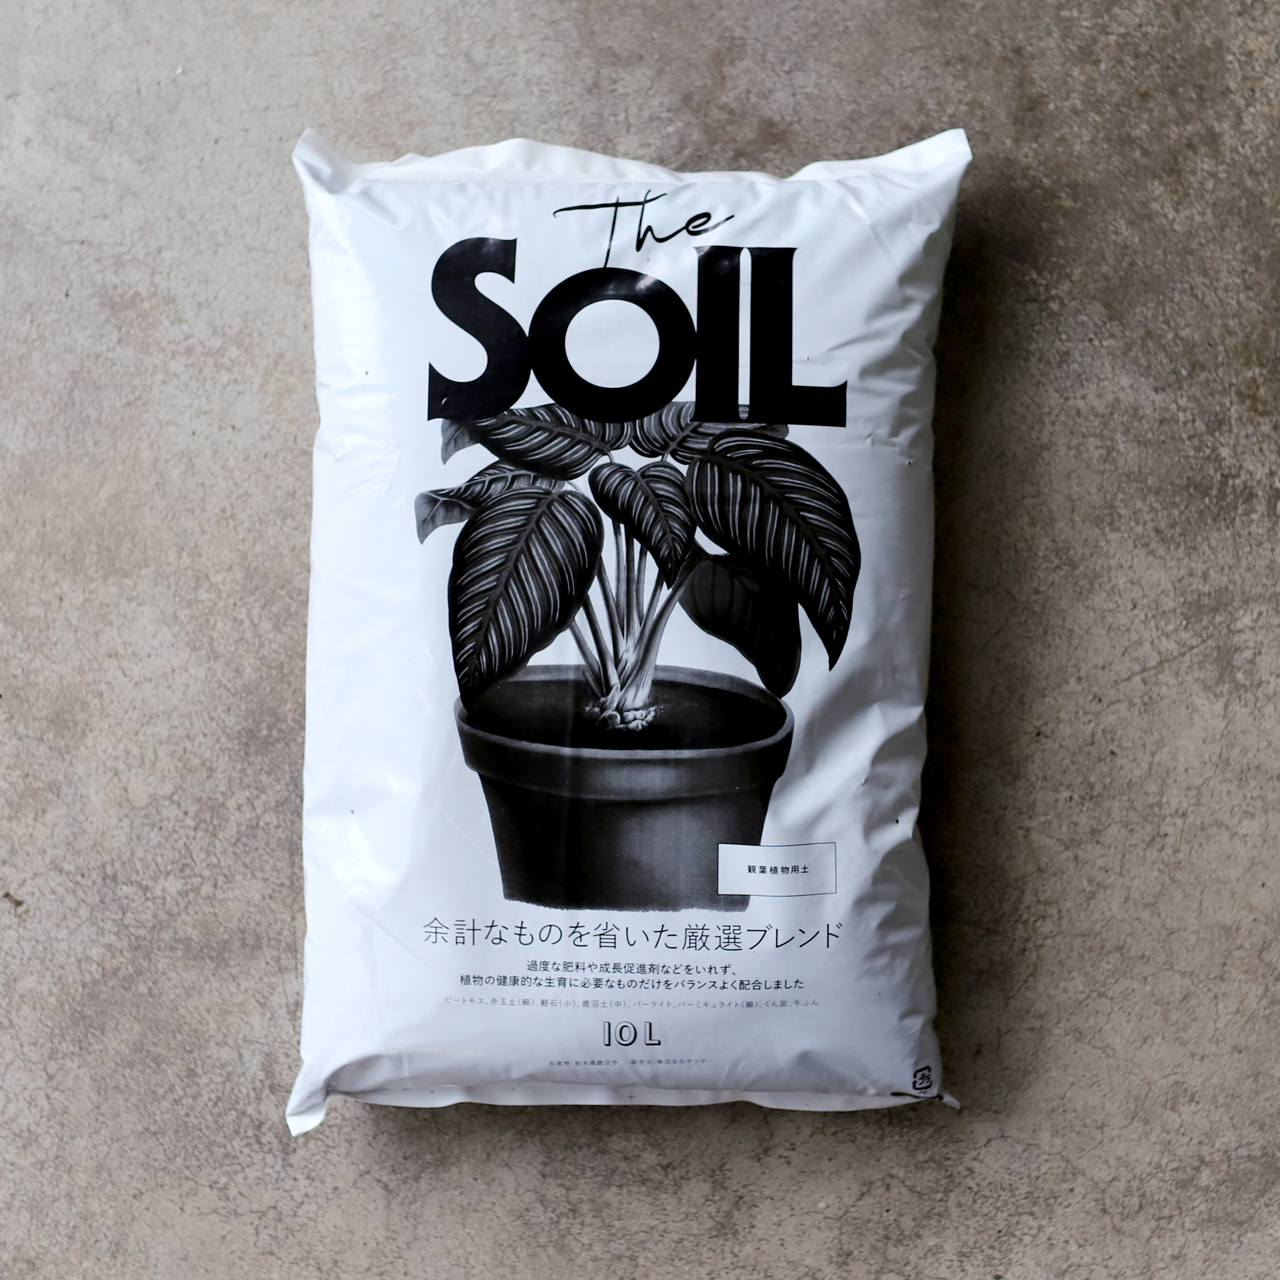 The SOIL 観葉植物用土 10L